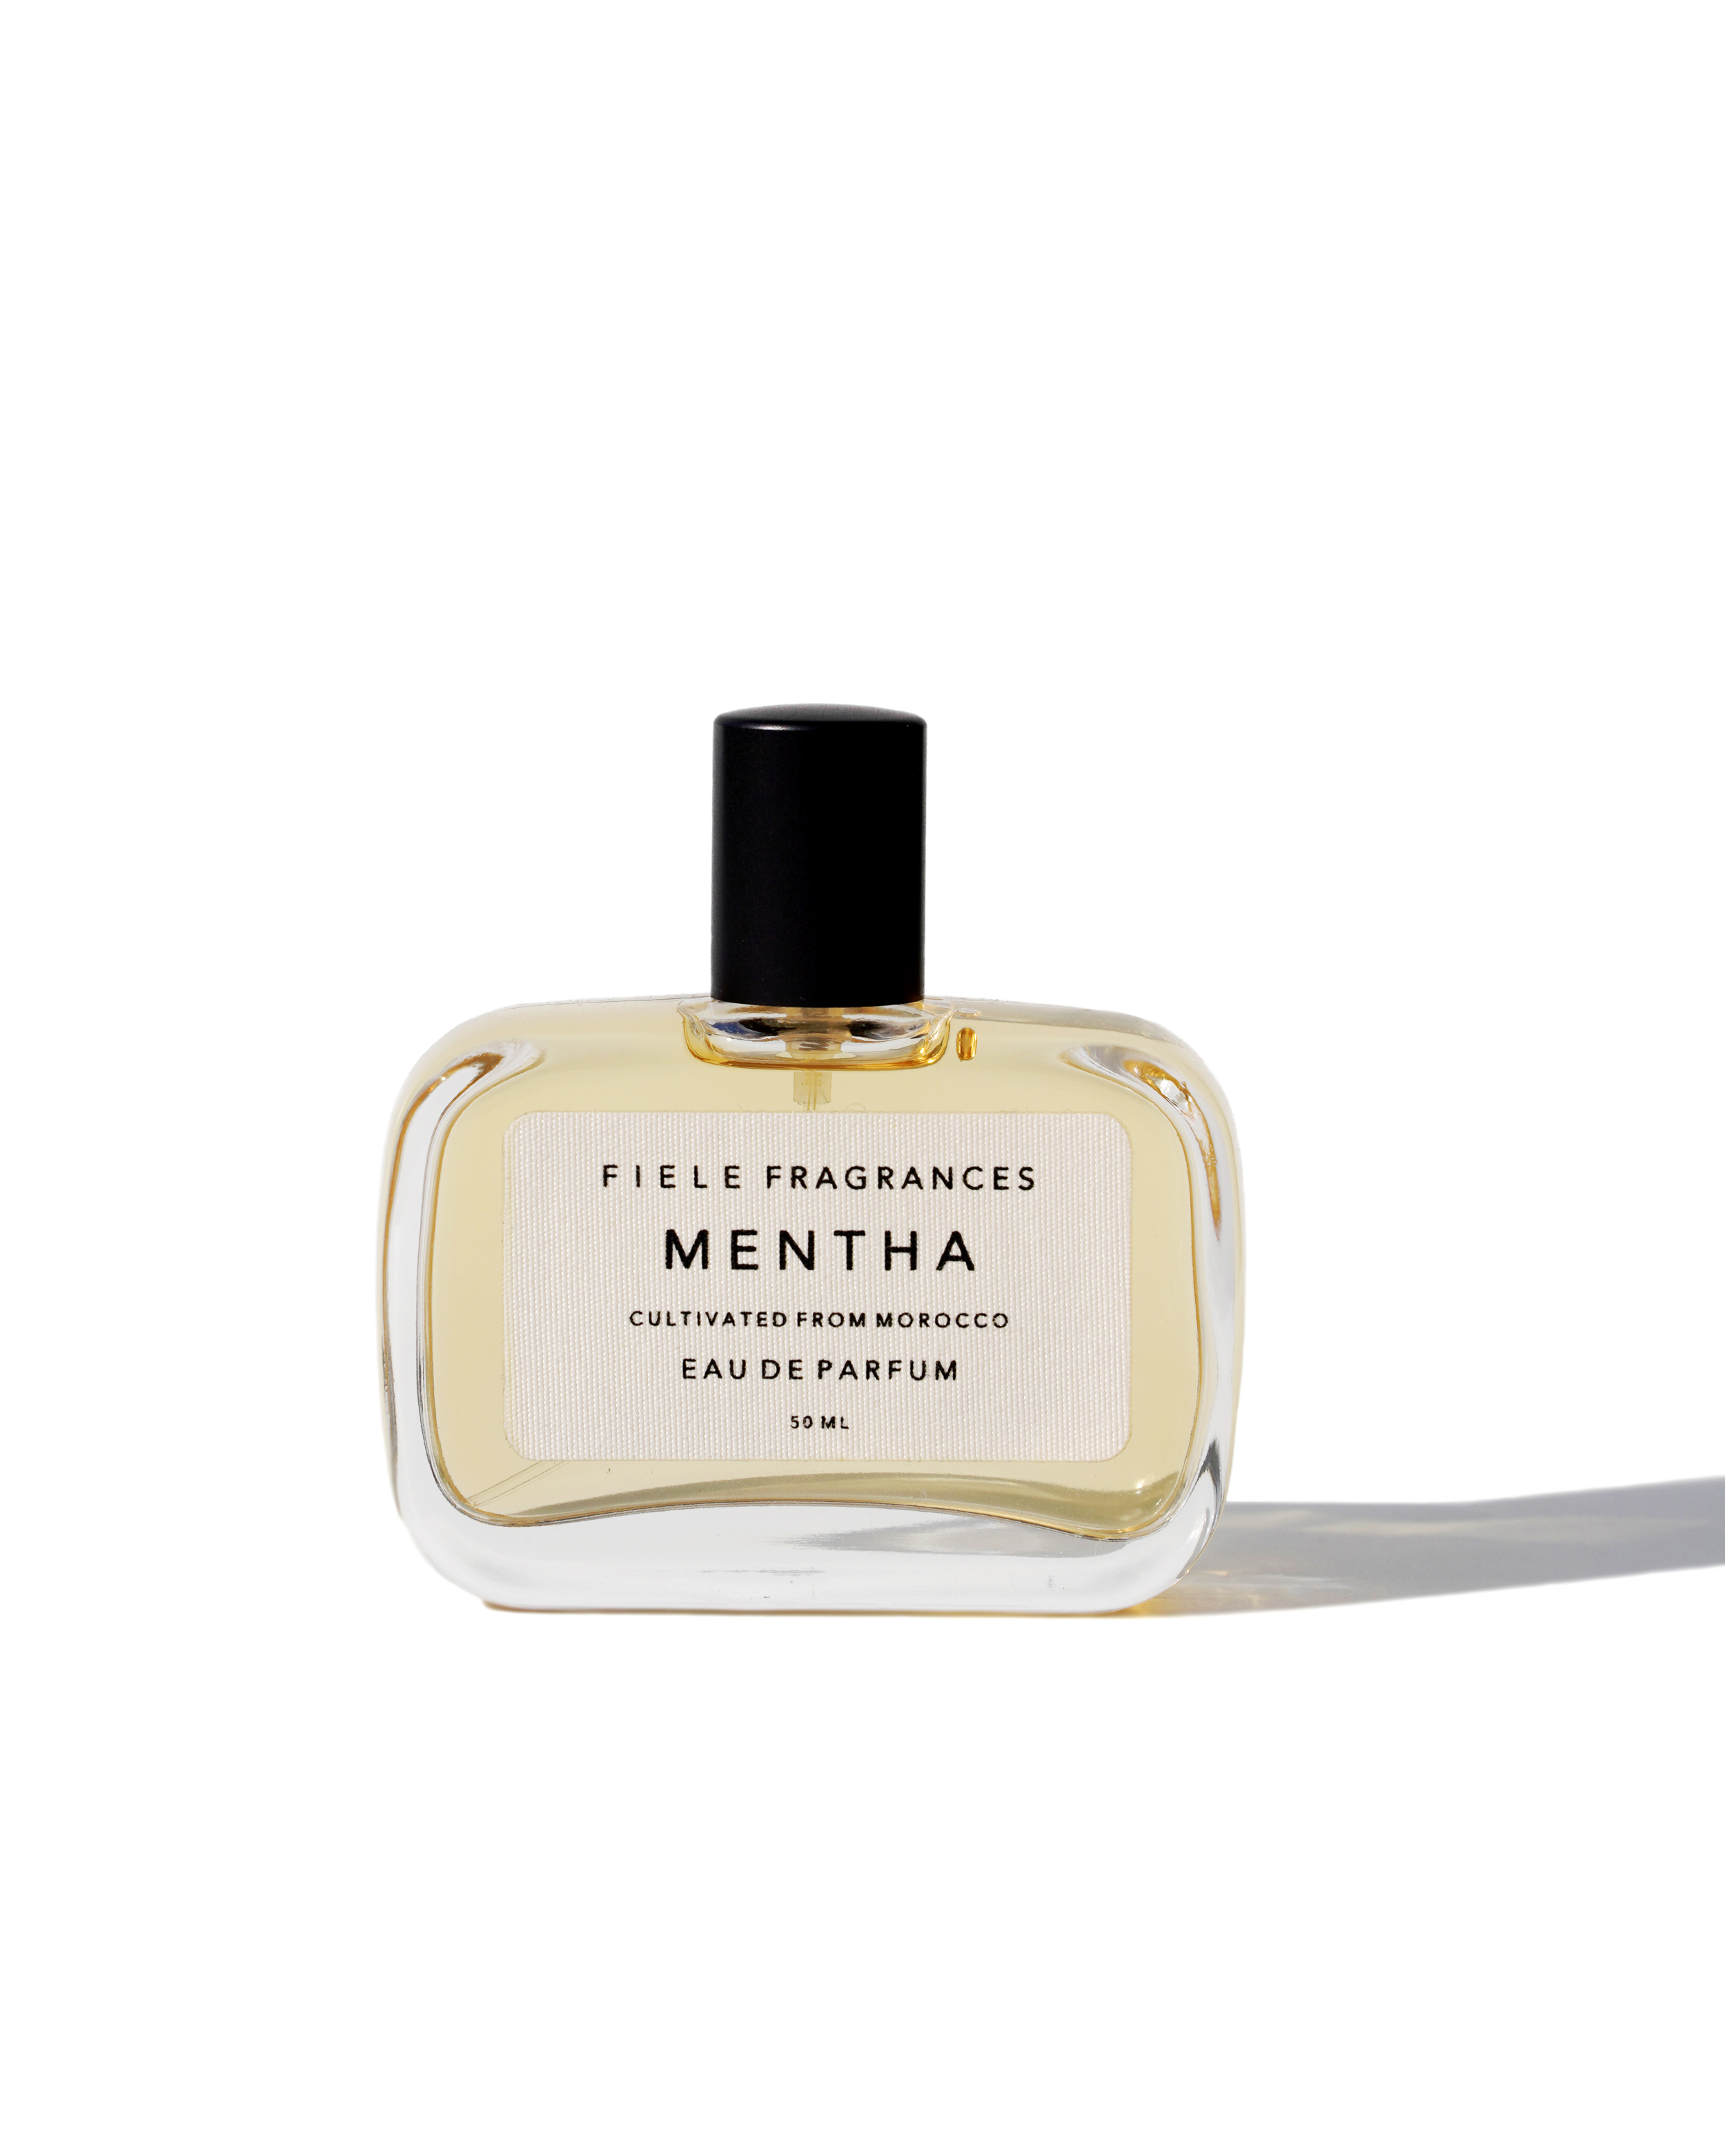 FIELE Fragrances – artemesia